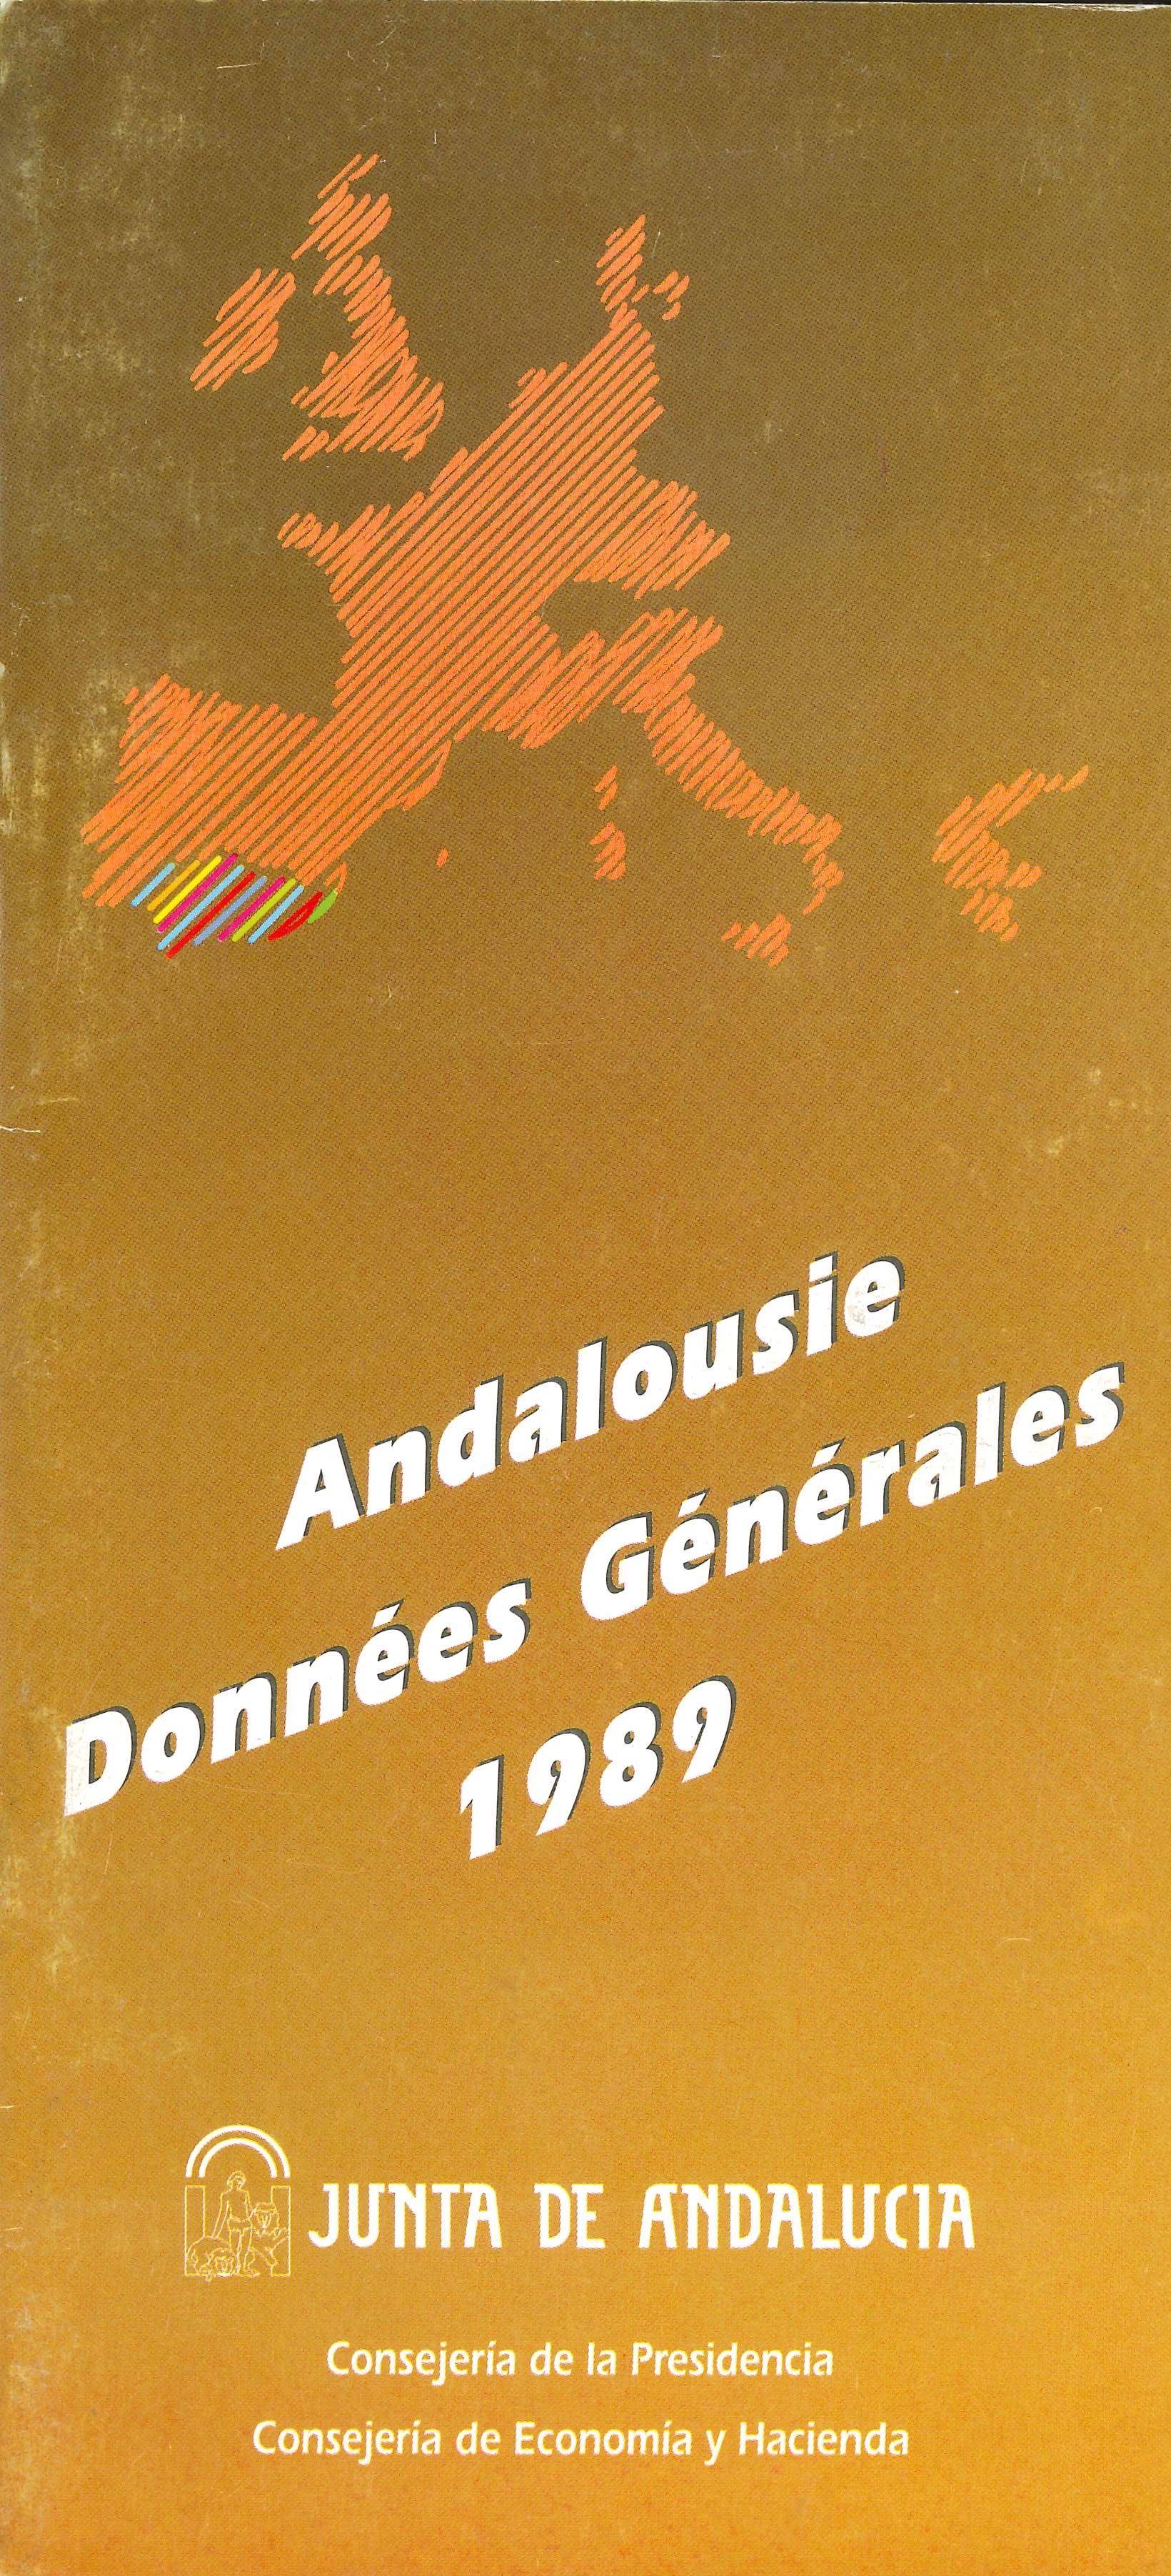 Imagen representativa de la publicación Andalousie: données générales 1989